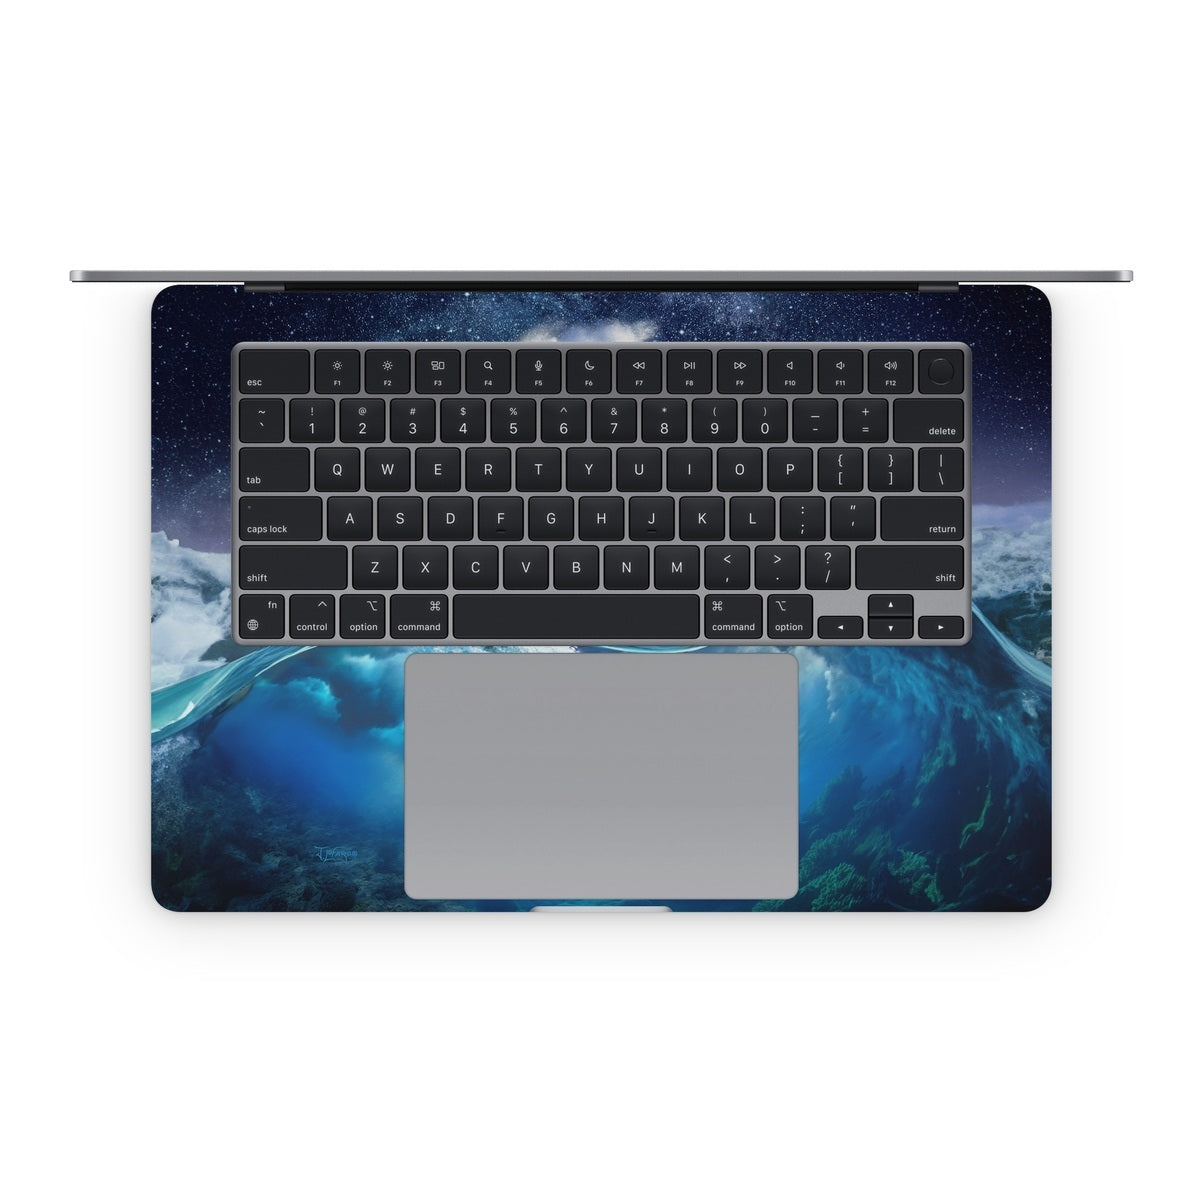 Orca Wave - Apple MacBook Skin